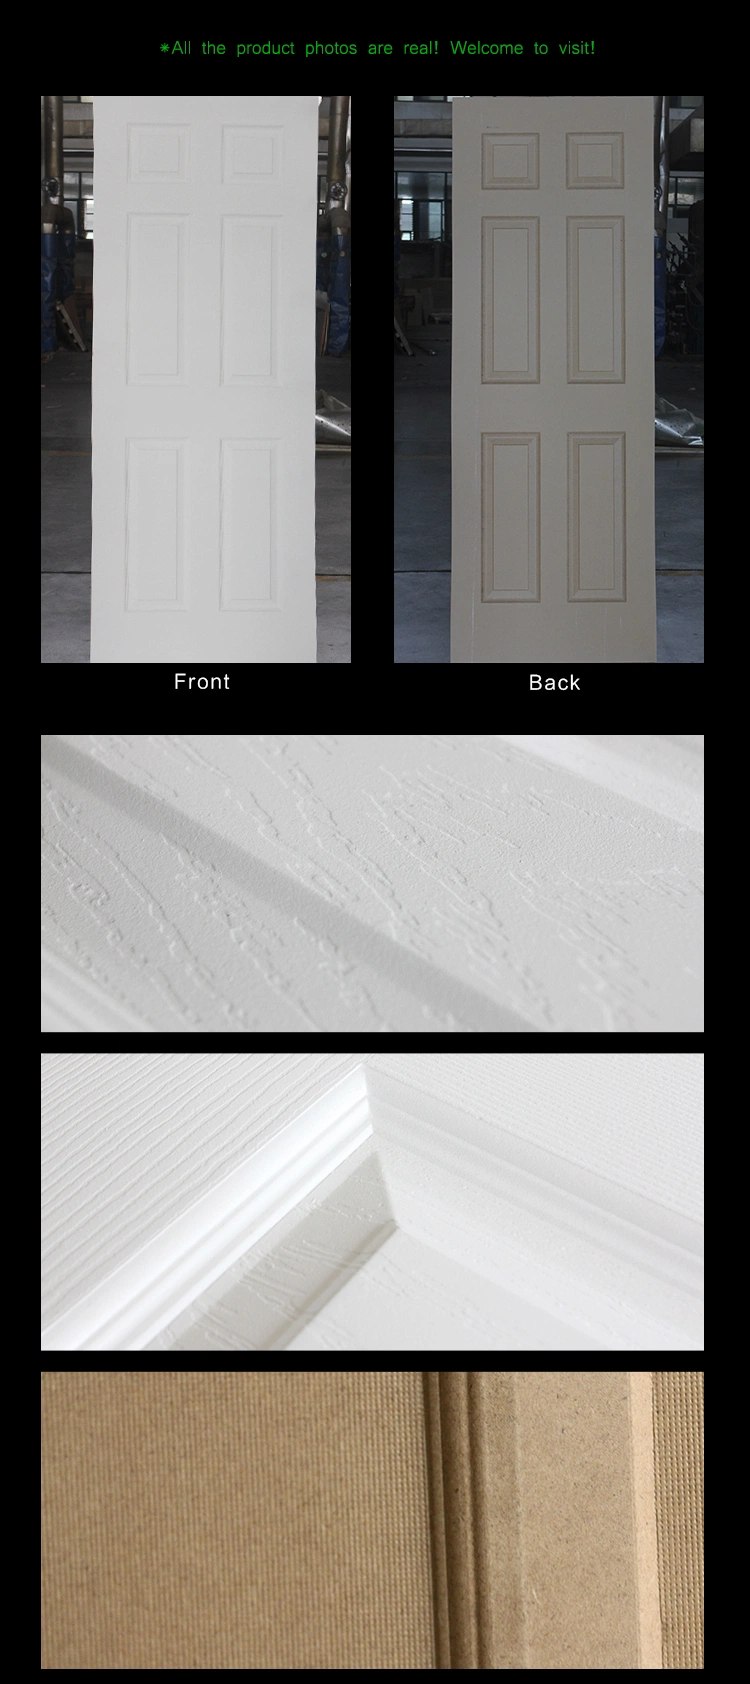 Jhk-F07 Latest Design Door Skin with Smooth Surface White Door Skin